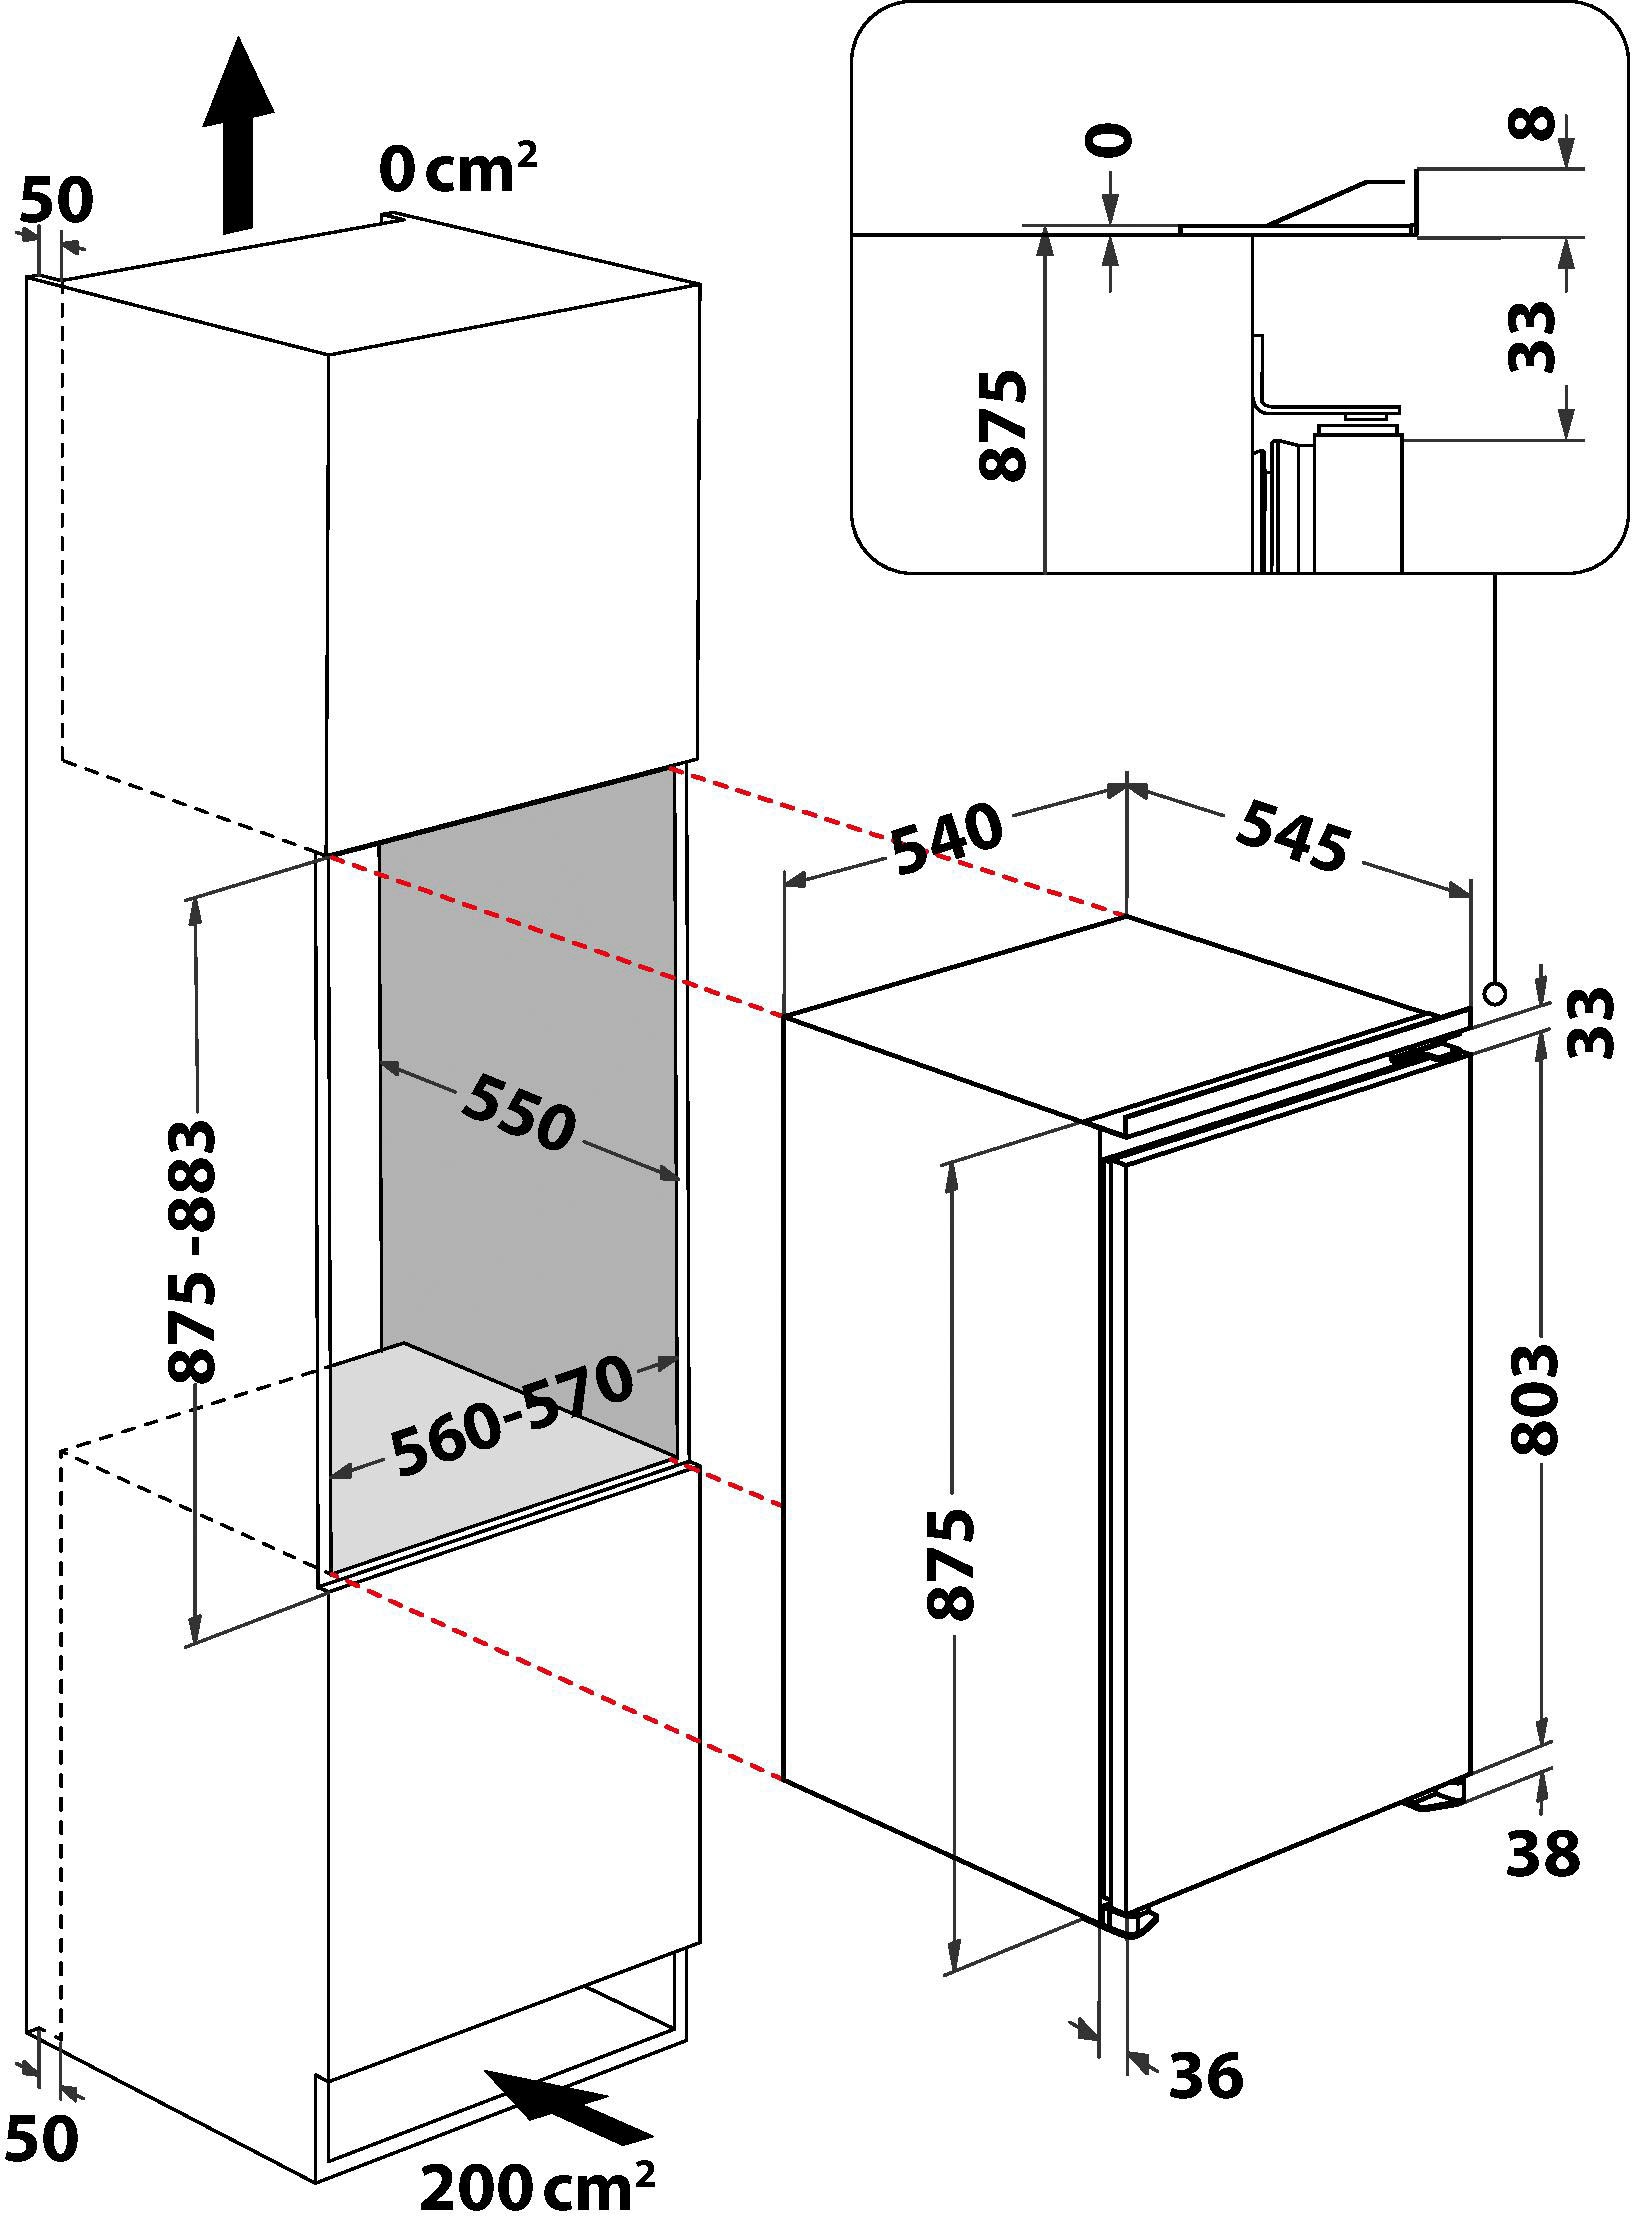 BAUKNECHT Einbaukühlschrank »KSI 9GF2E«, KSI 9GF2E, 87,5 cm hoch, 54 cm breit